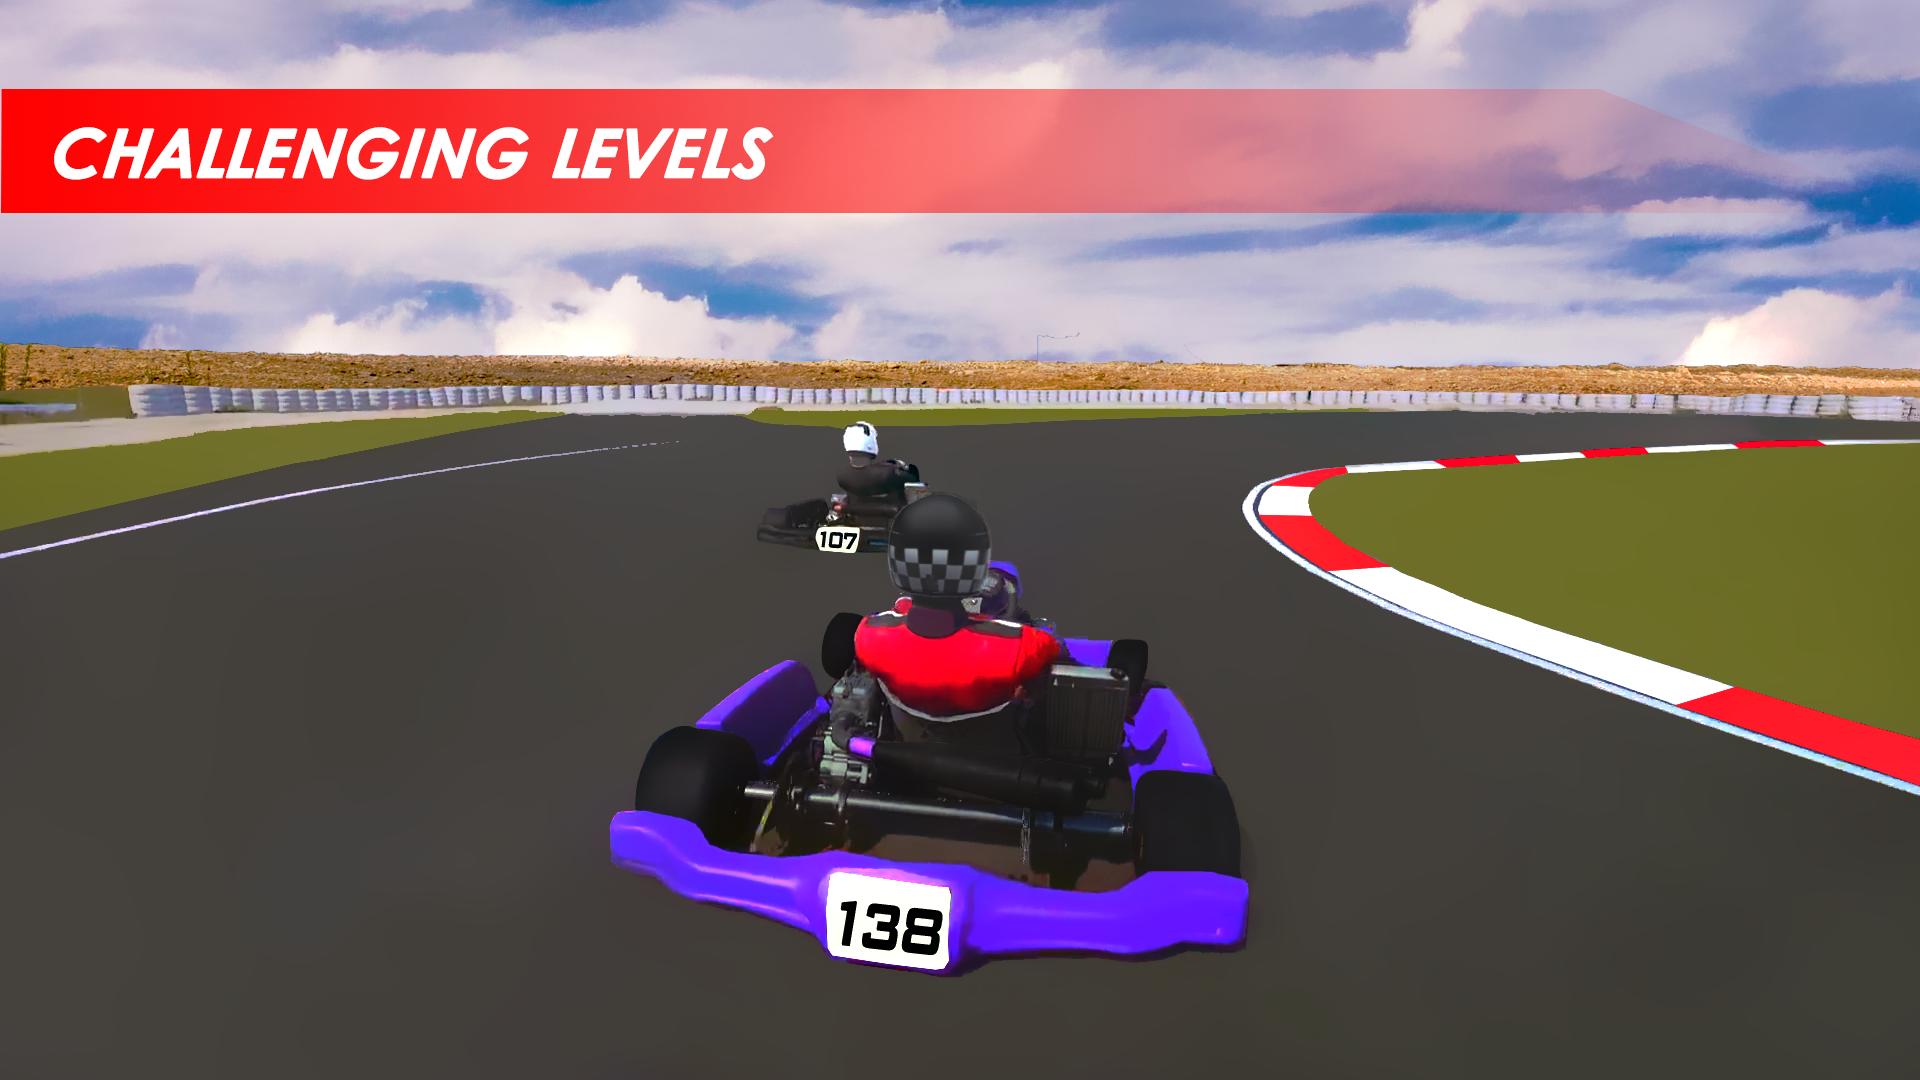 Go Kart Racer Kart Racing 3d Game For Android Apk Download - 7 best roblox photos images typing games go kart racing kart